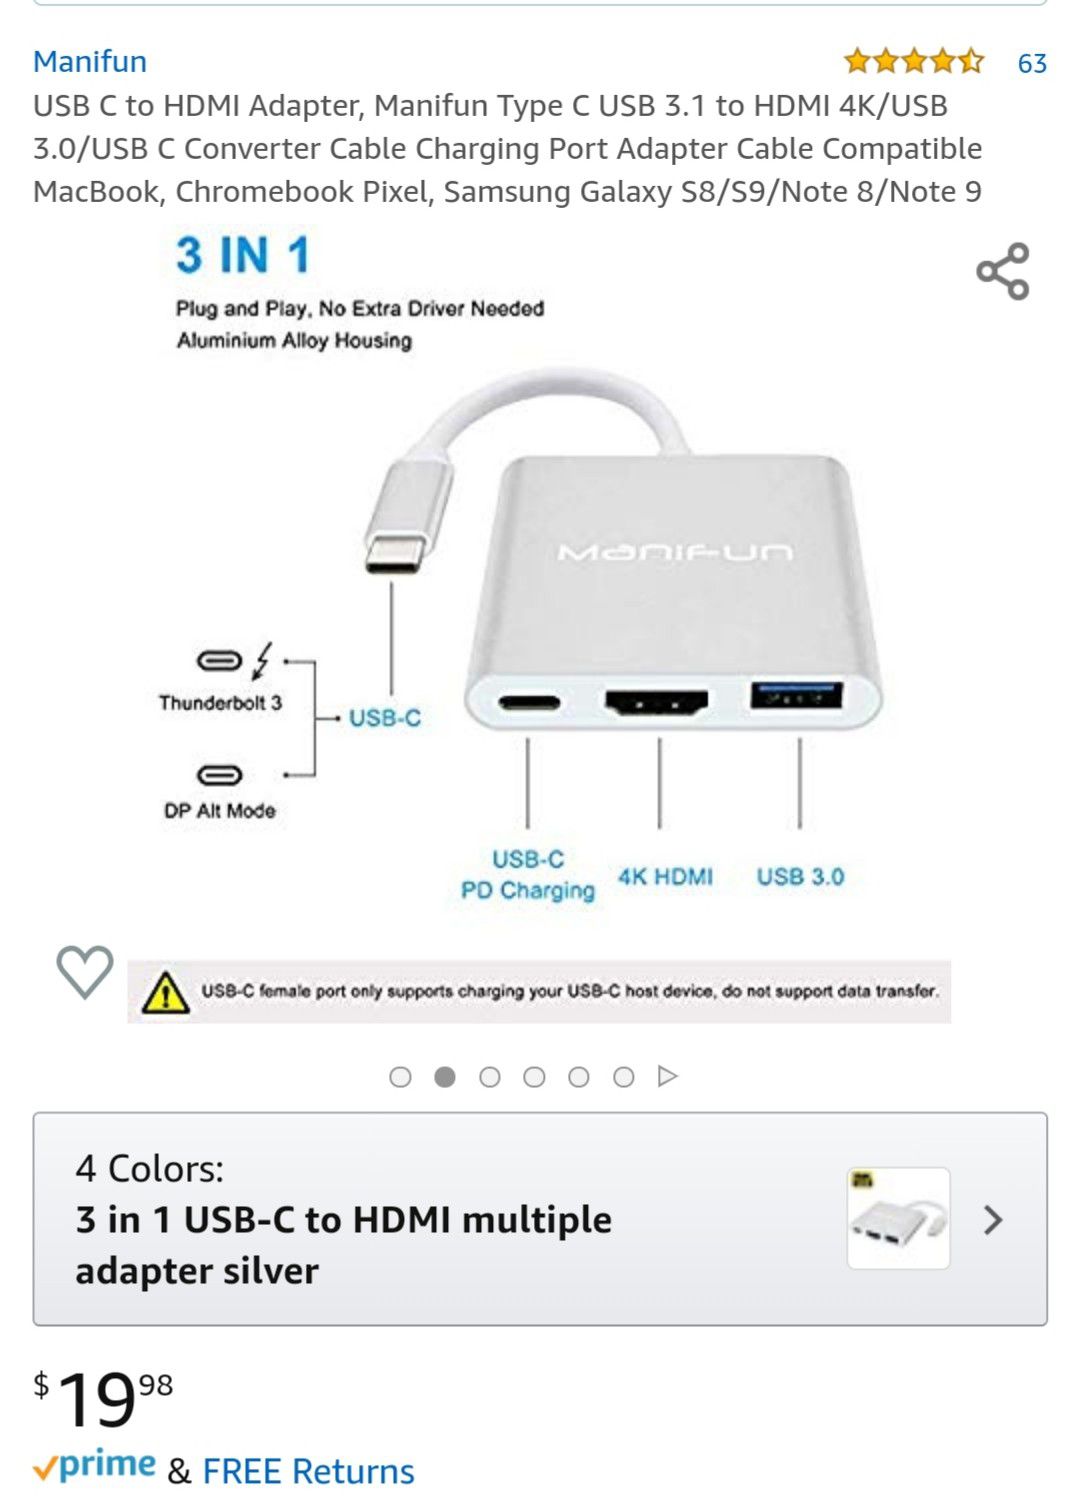 USB C to HDMI Adapter, Manifun Type C USB 3.1